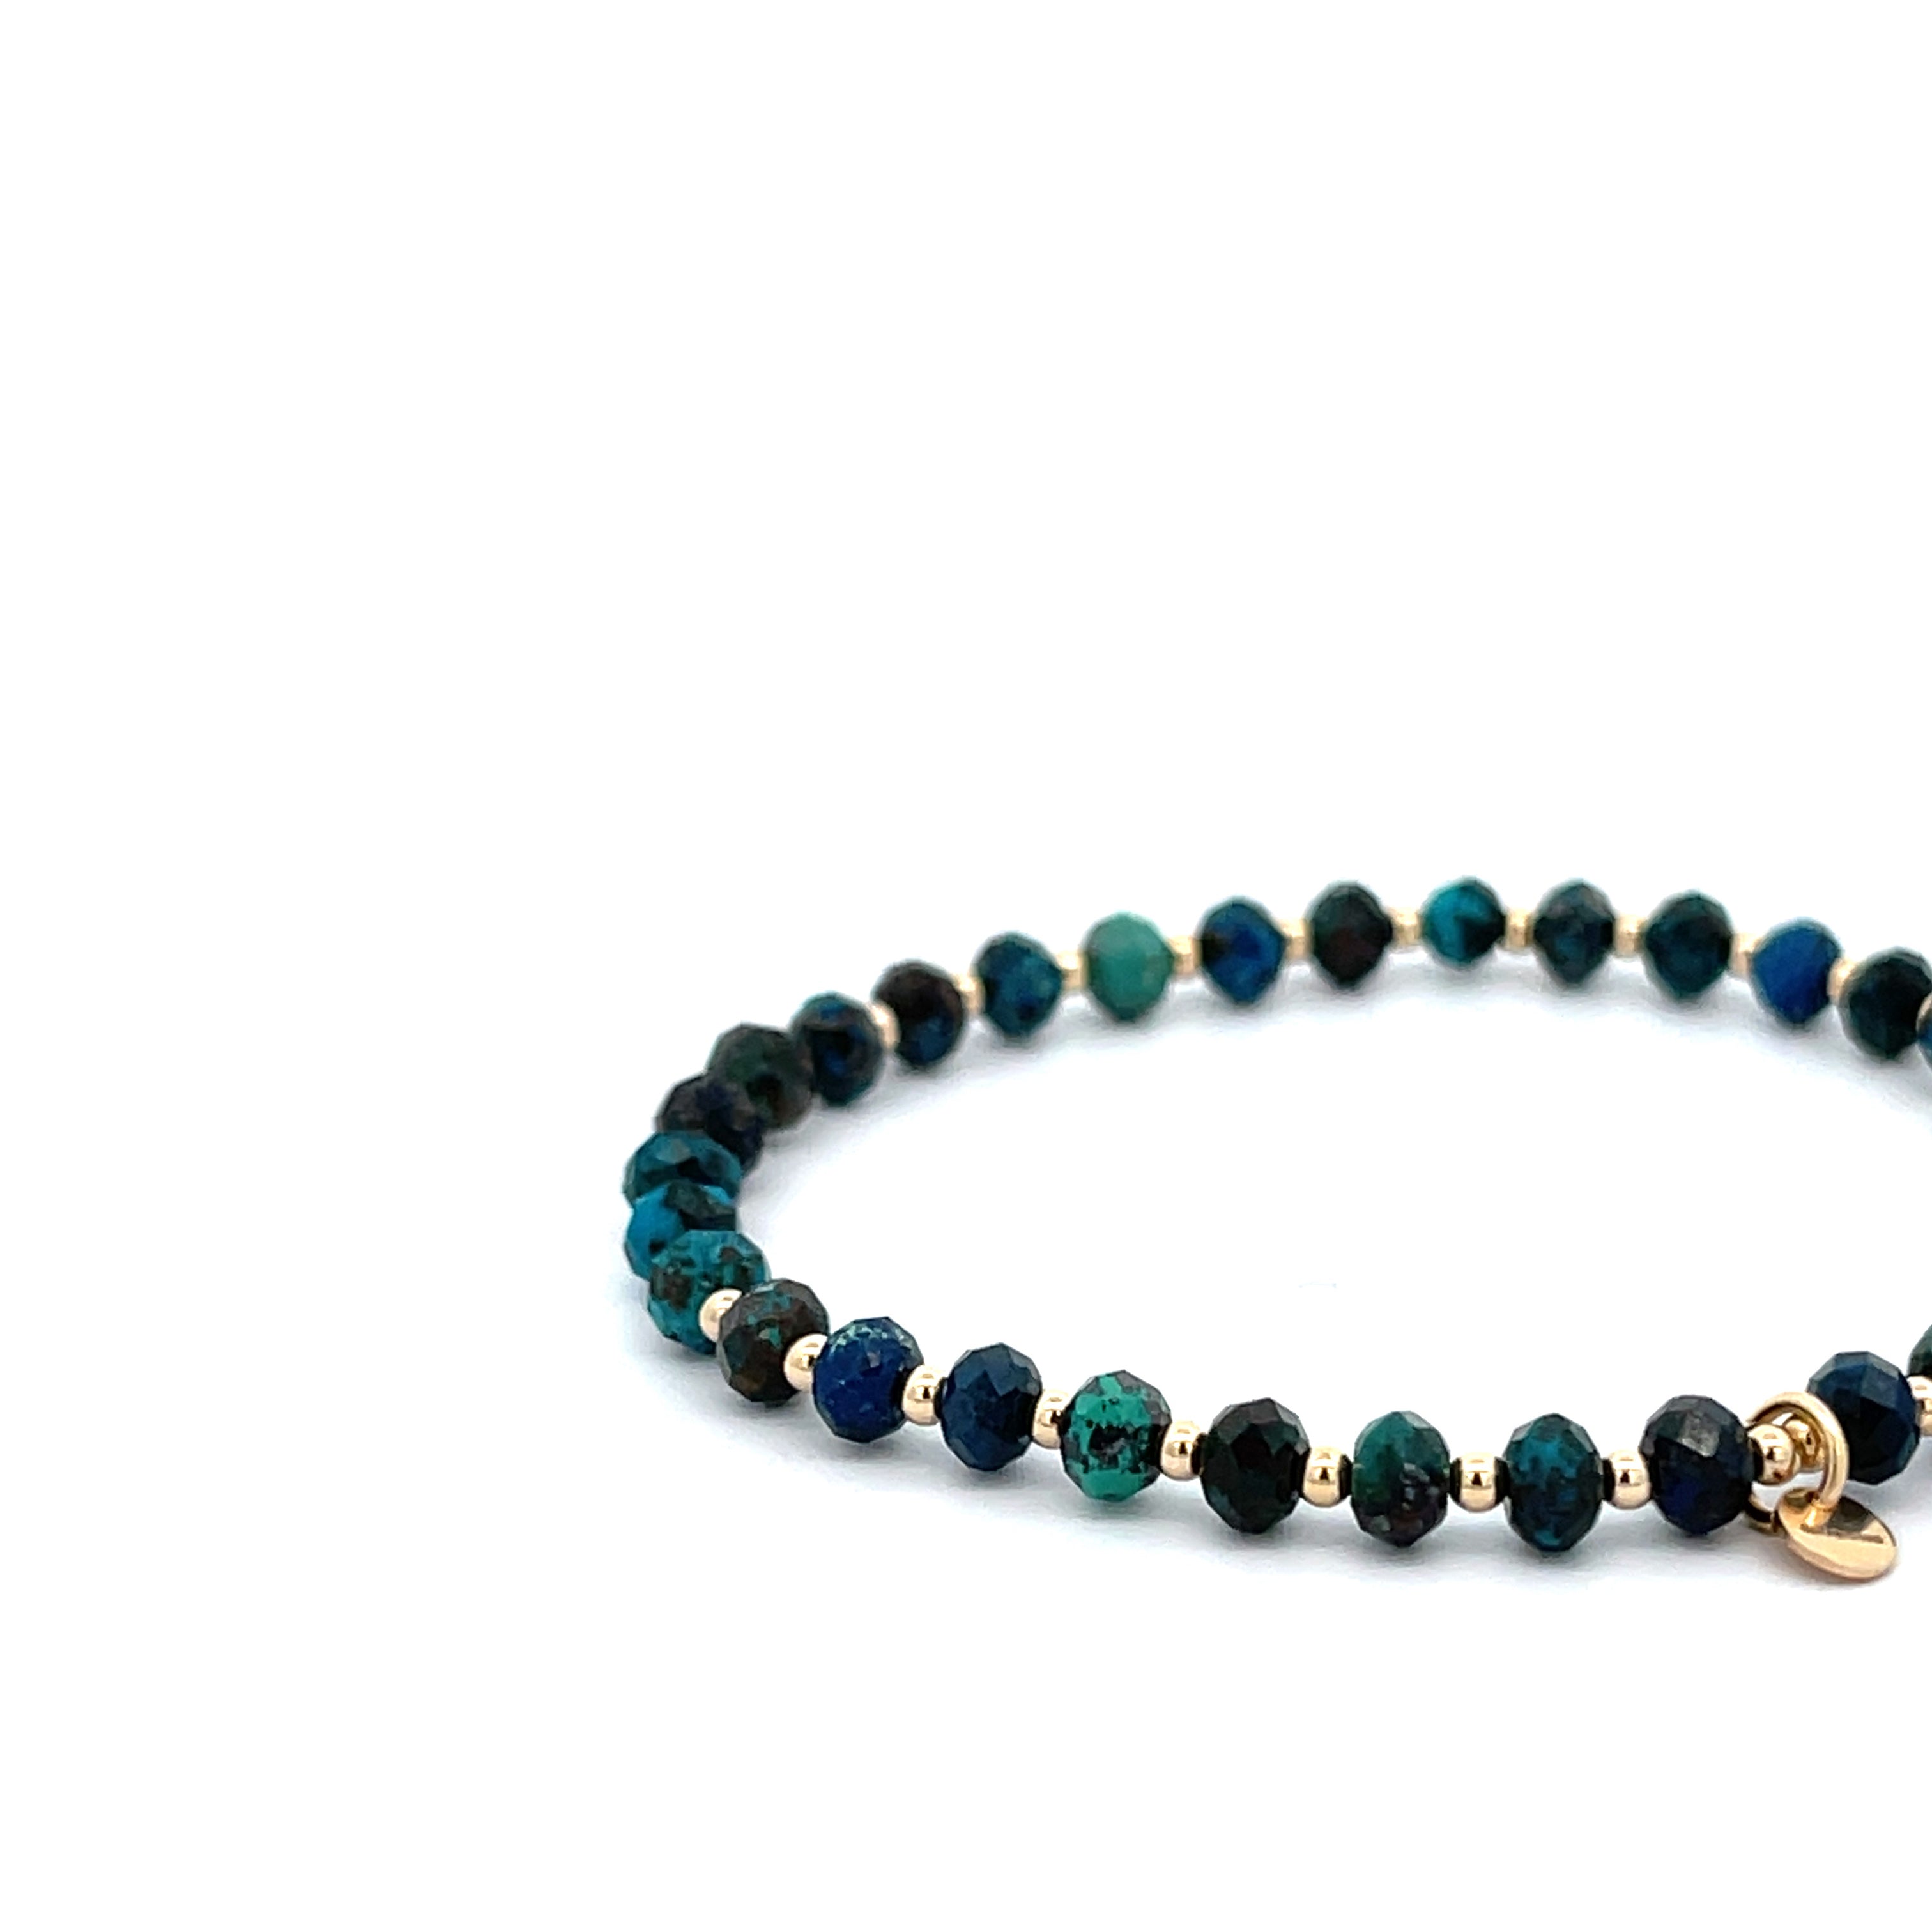 Shop Now: KAI Blue Chrysocolla Stone Bracelet